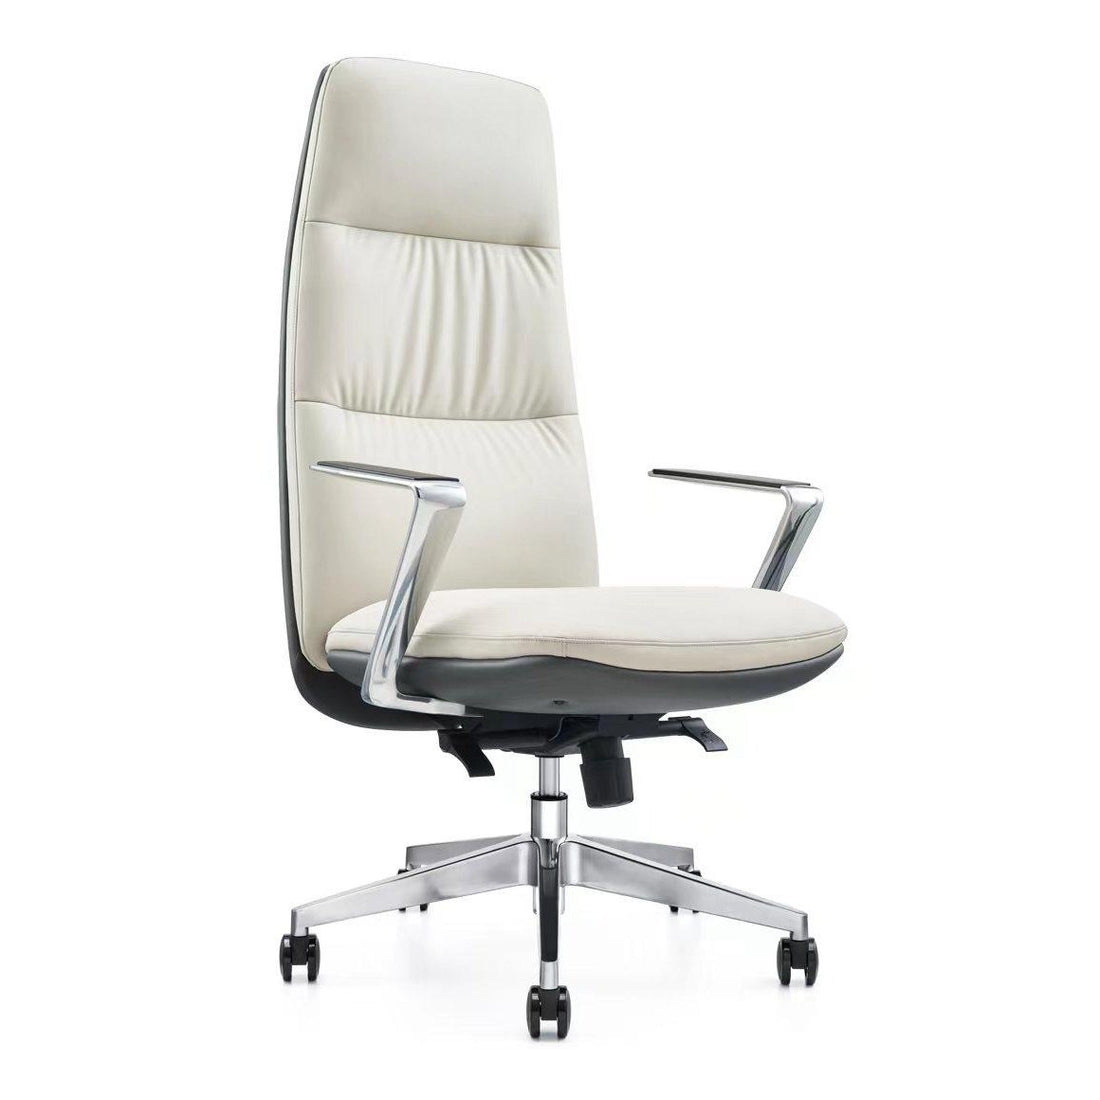 Aqua Luxury High Back Chair FC